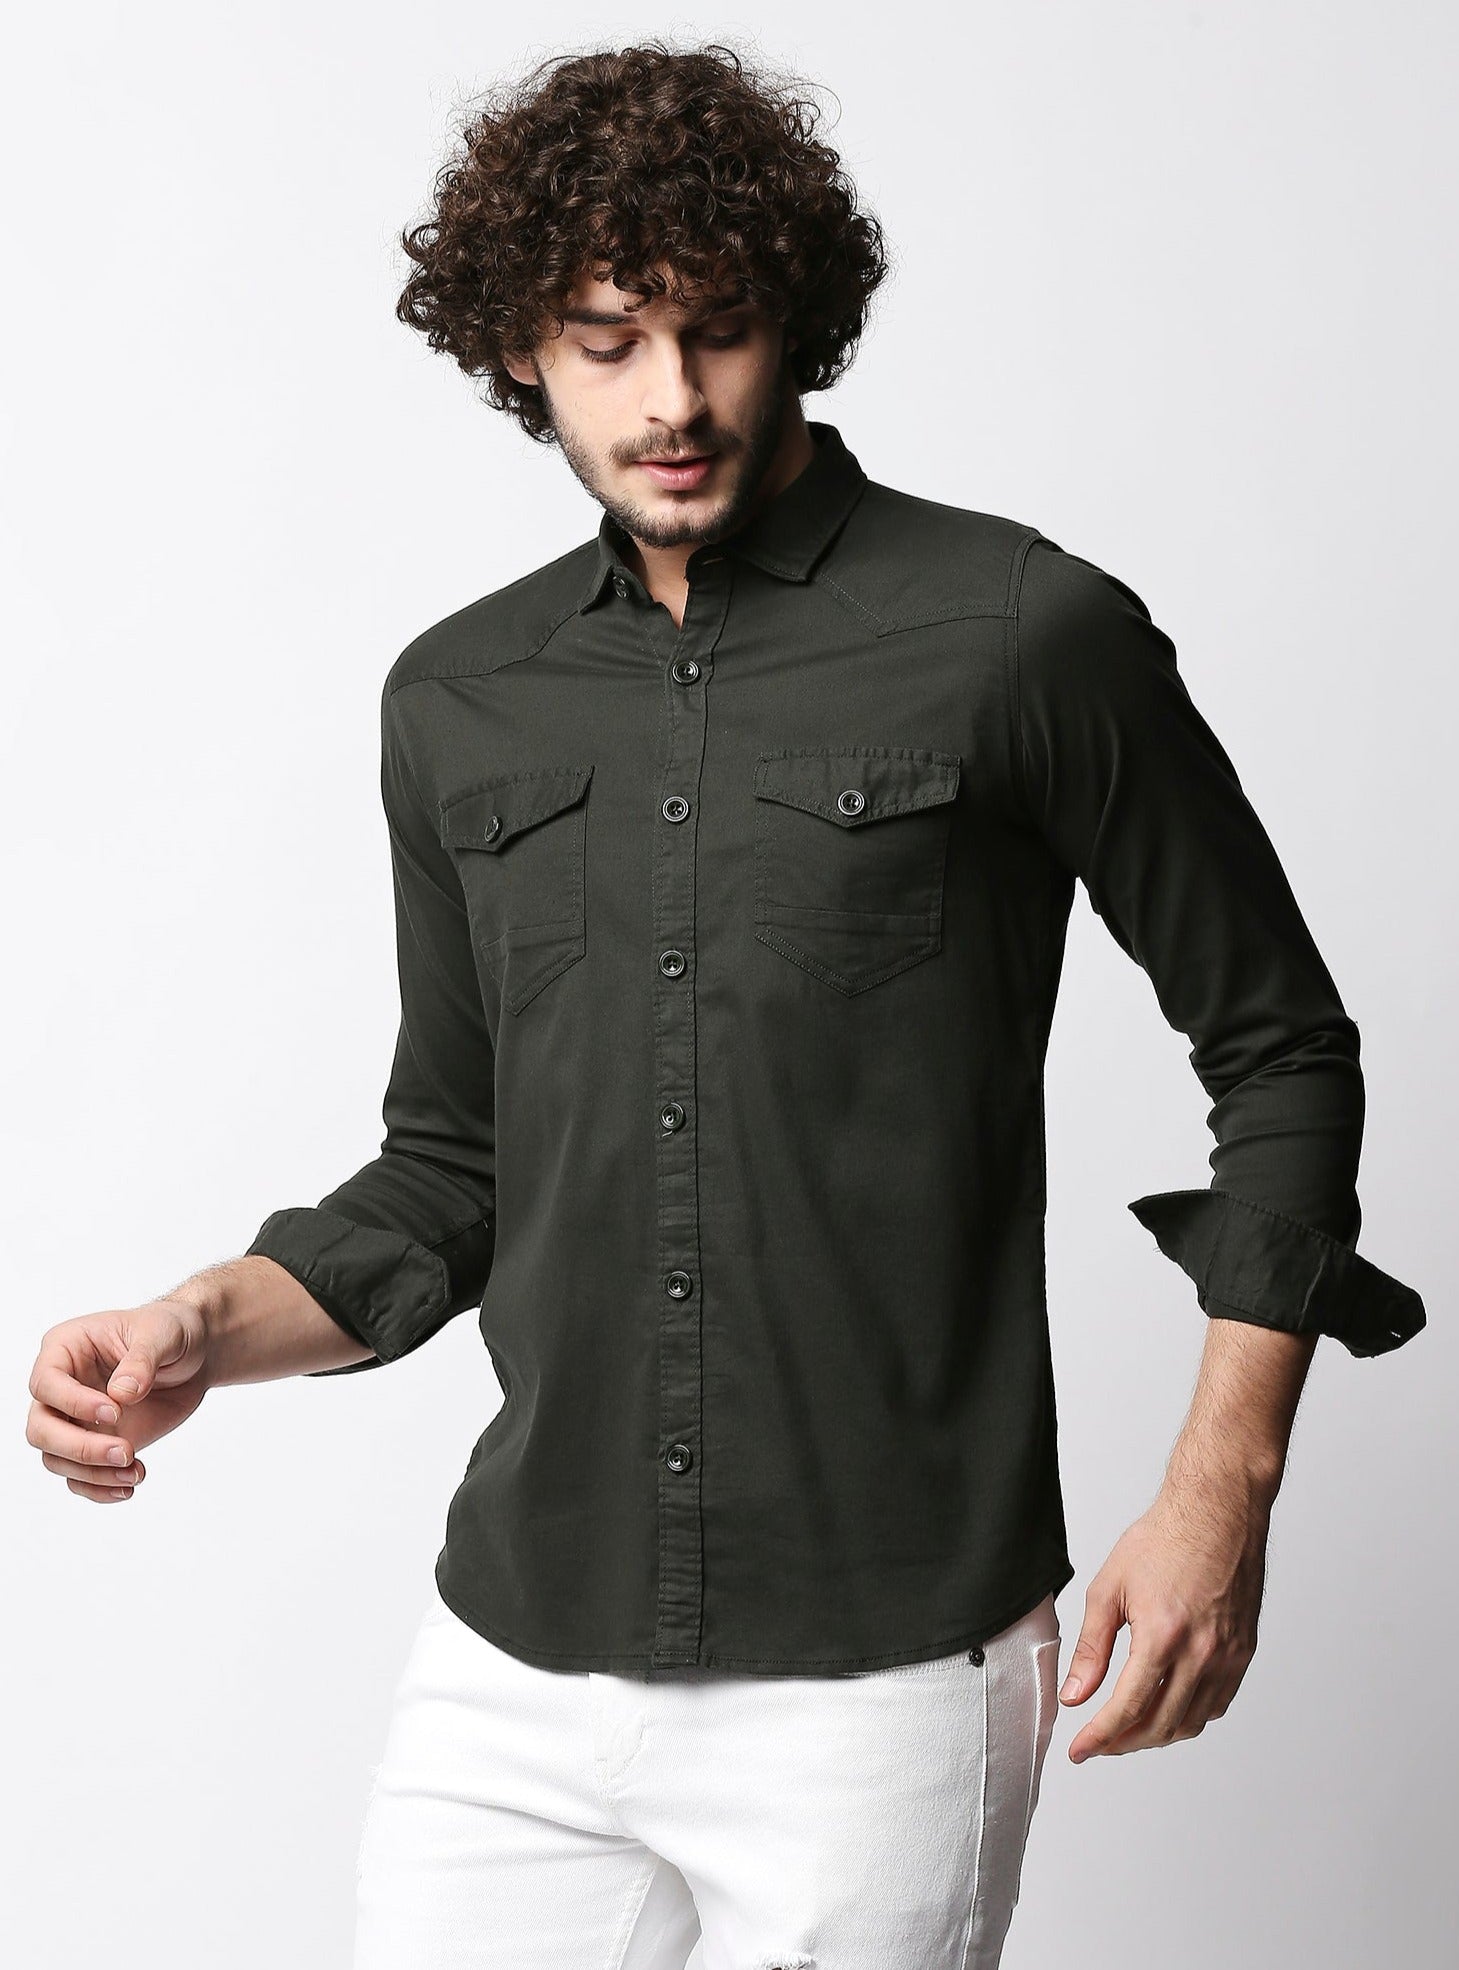 Fostino Dark Green Double Pocket Full Sleeves Casual Shirt - Fostino - Shirts